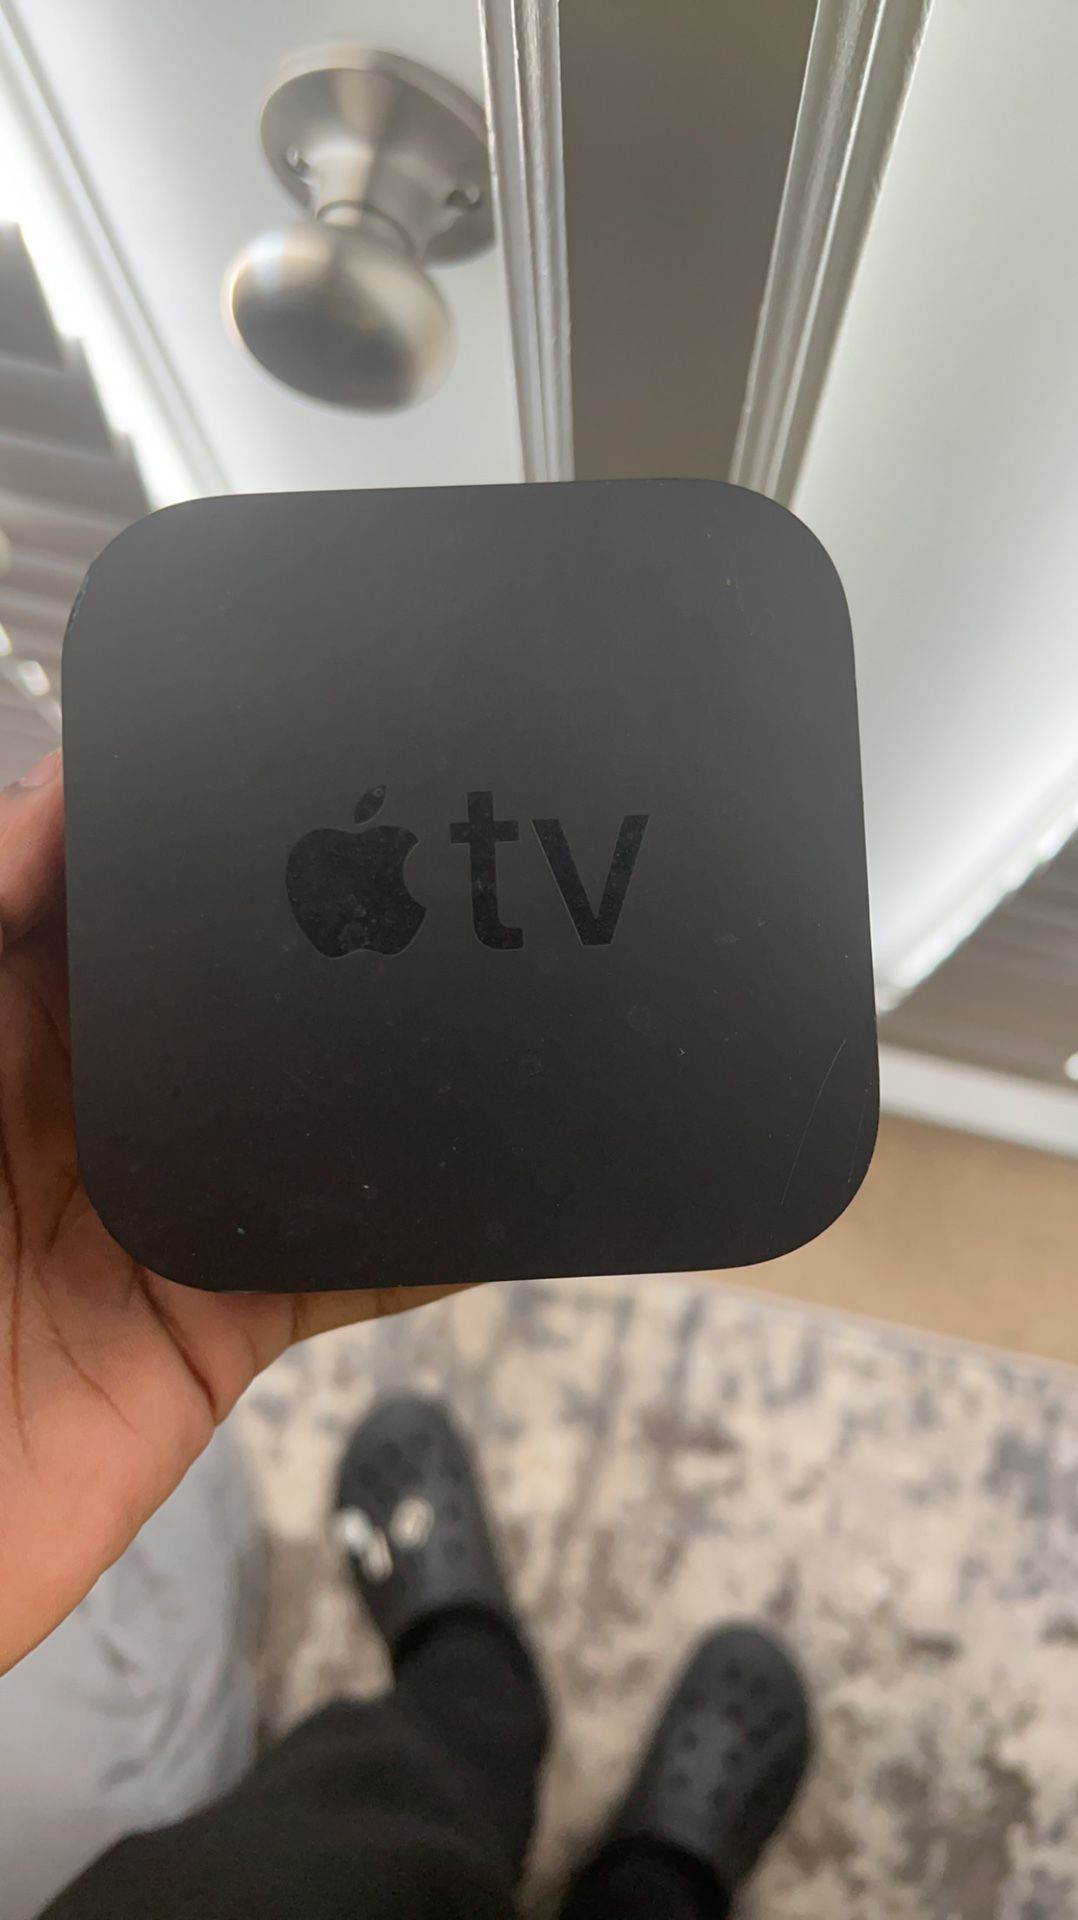 Apple TV (Just Box, HDMI & Power CORD) 